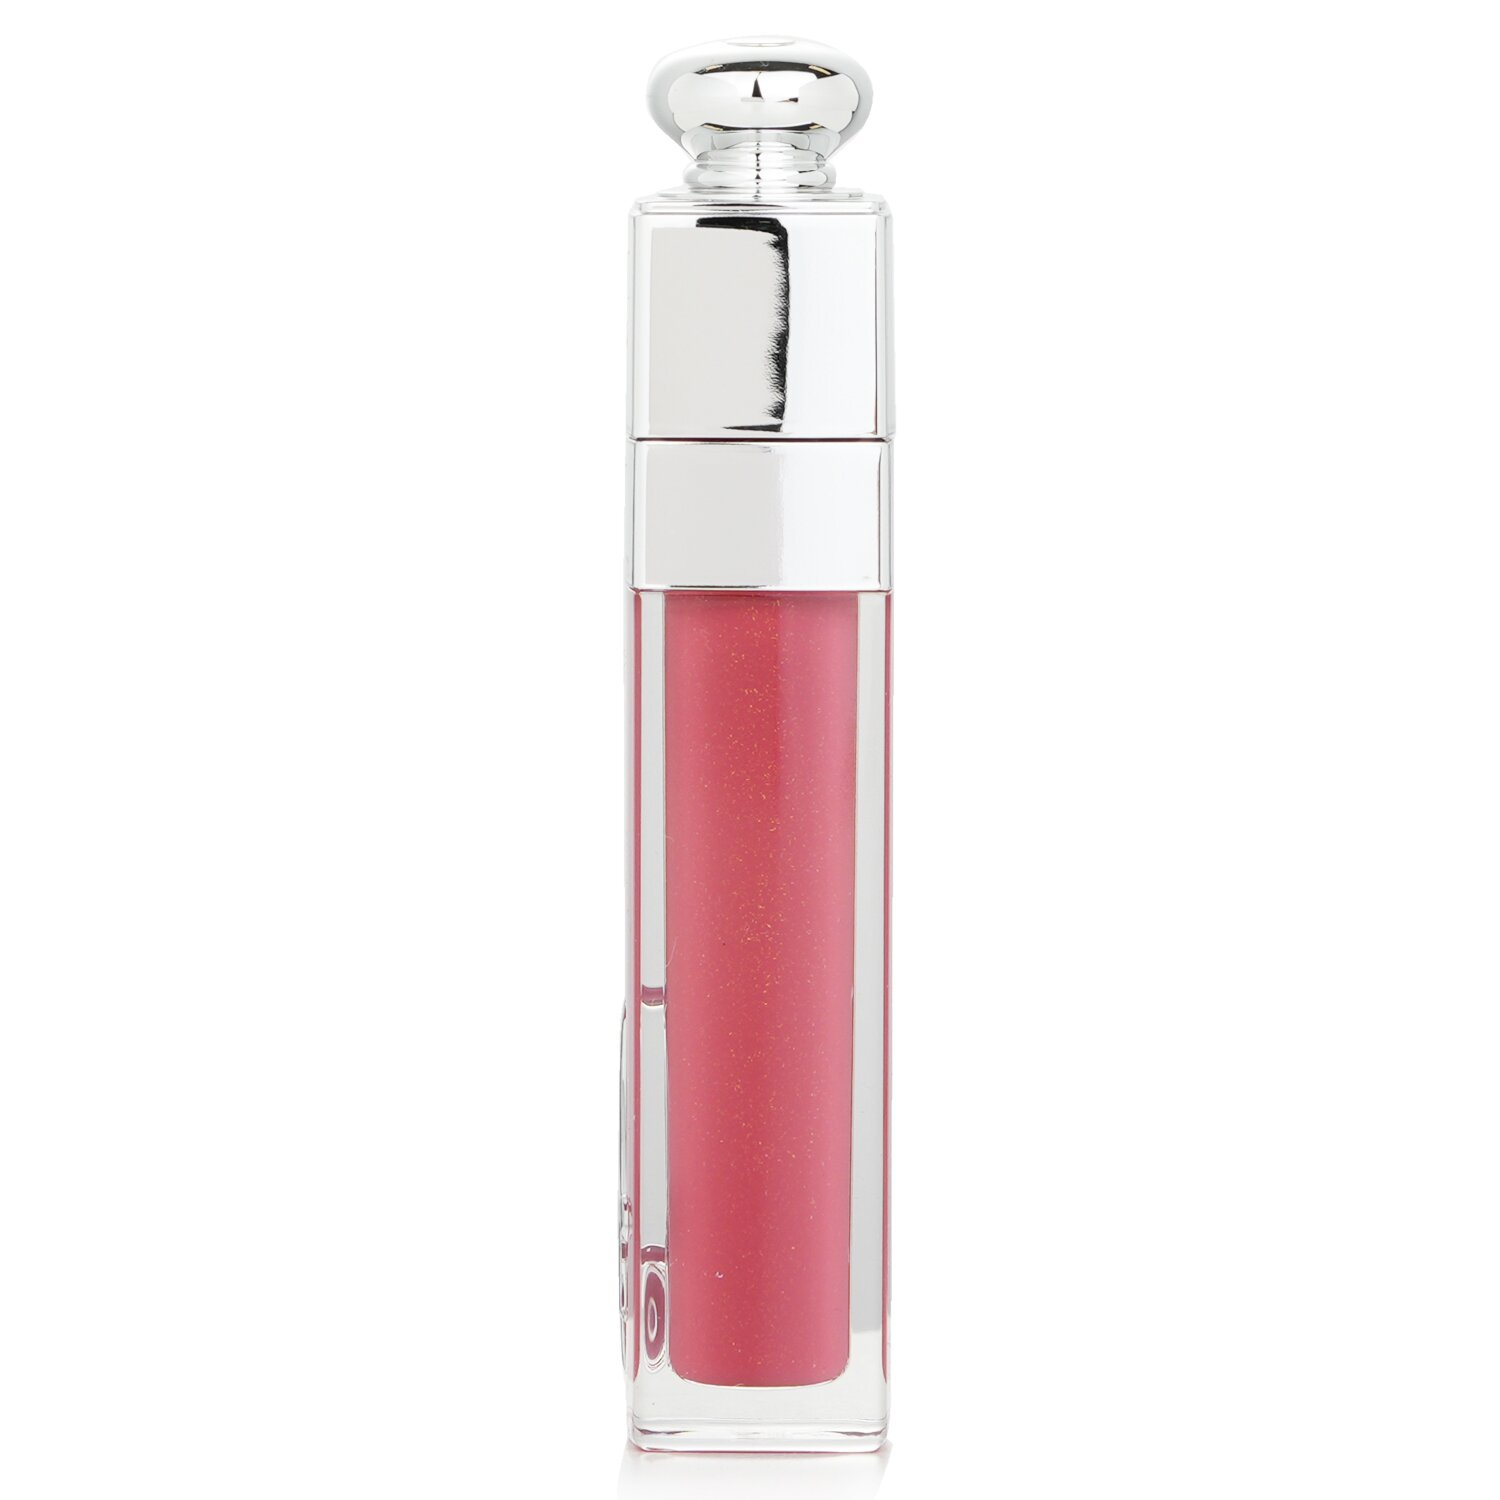 Christian Dior Addict Lip Maximizer 6ml/0.20oz